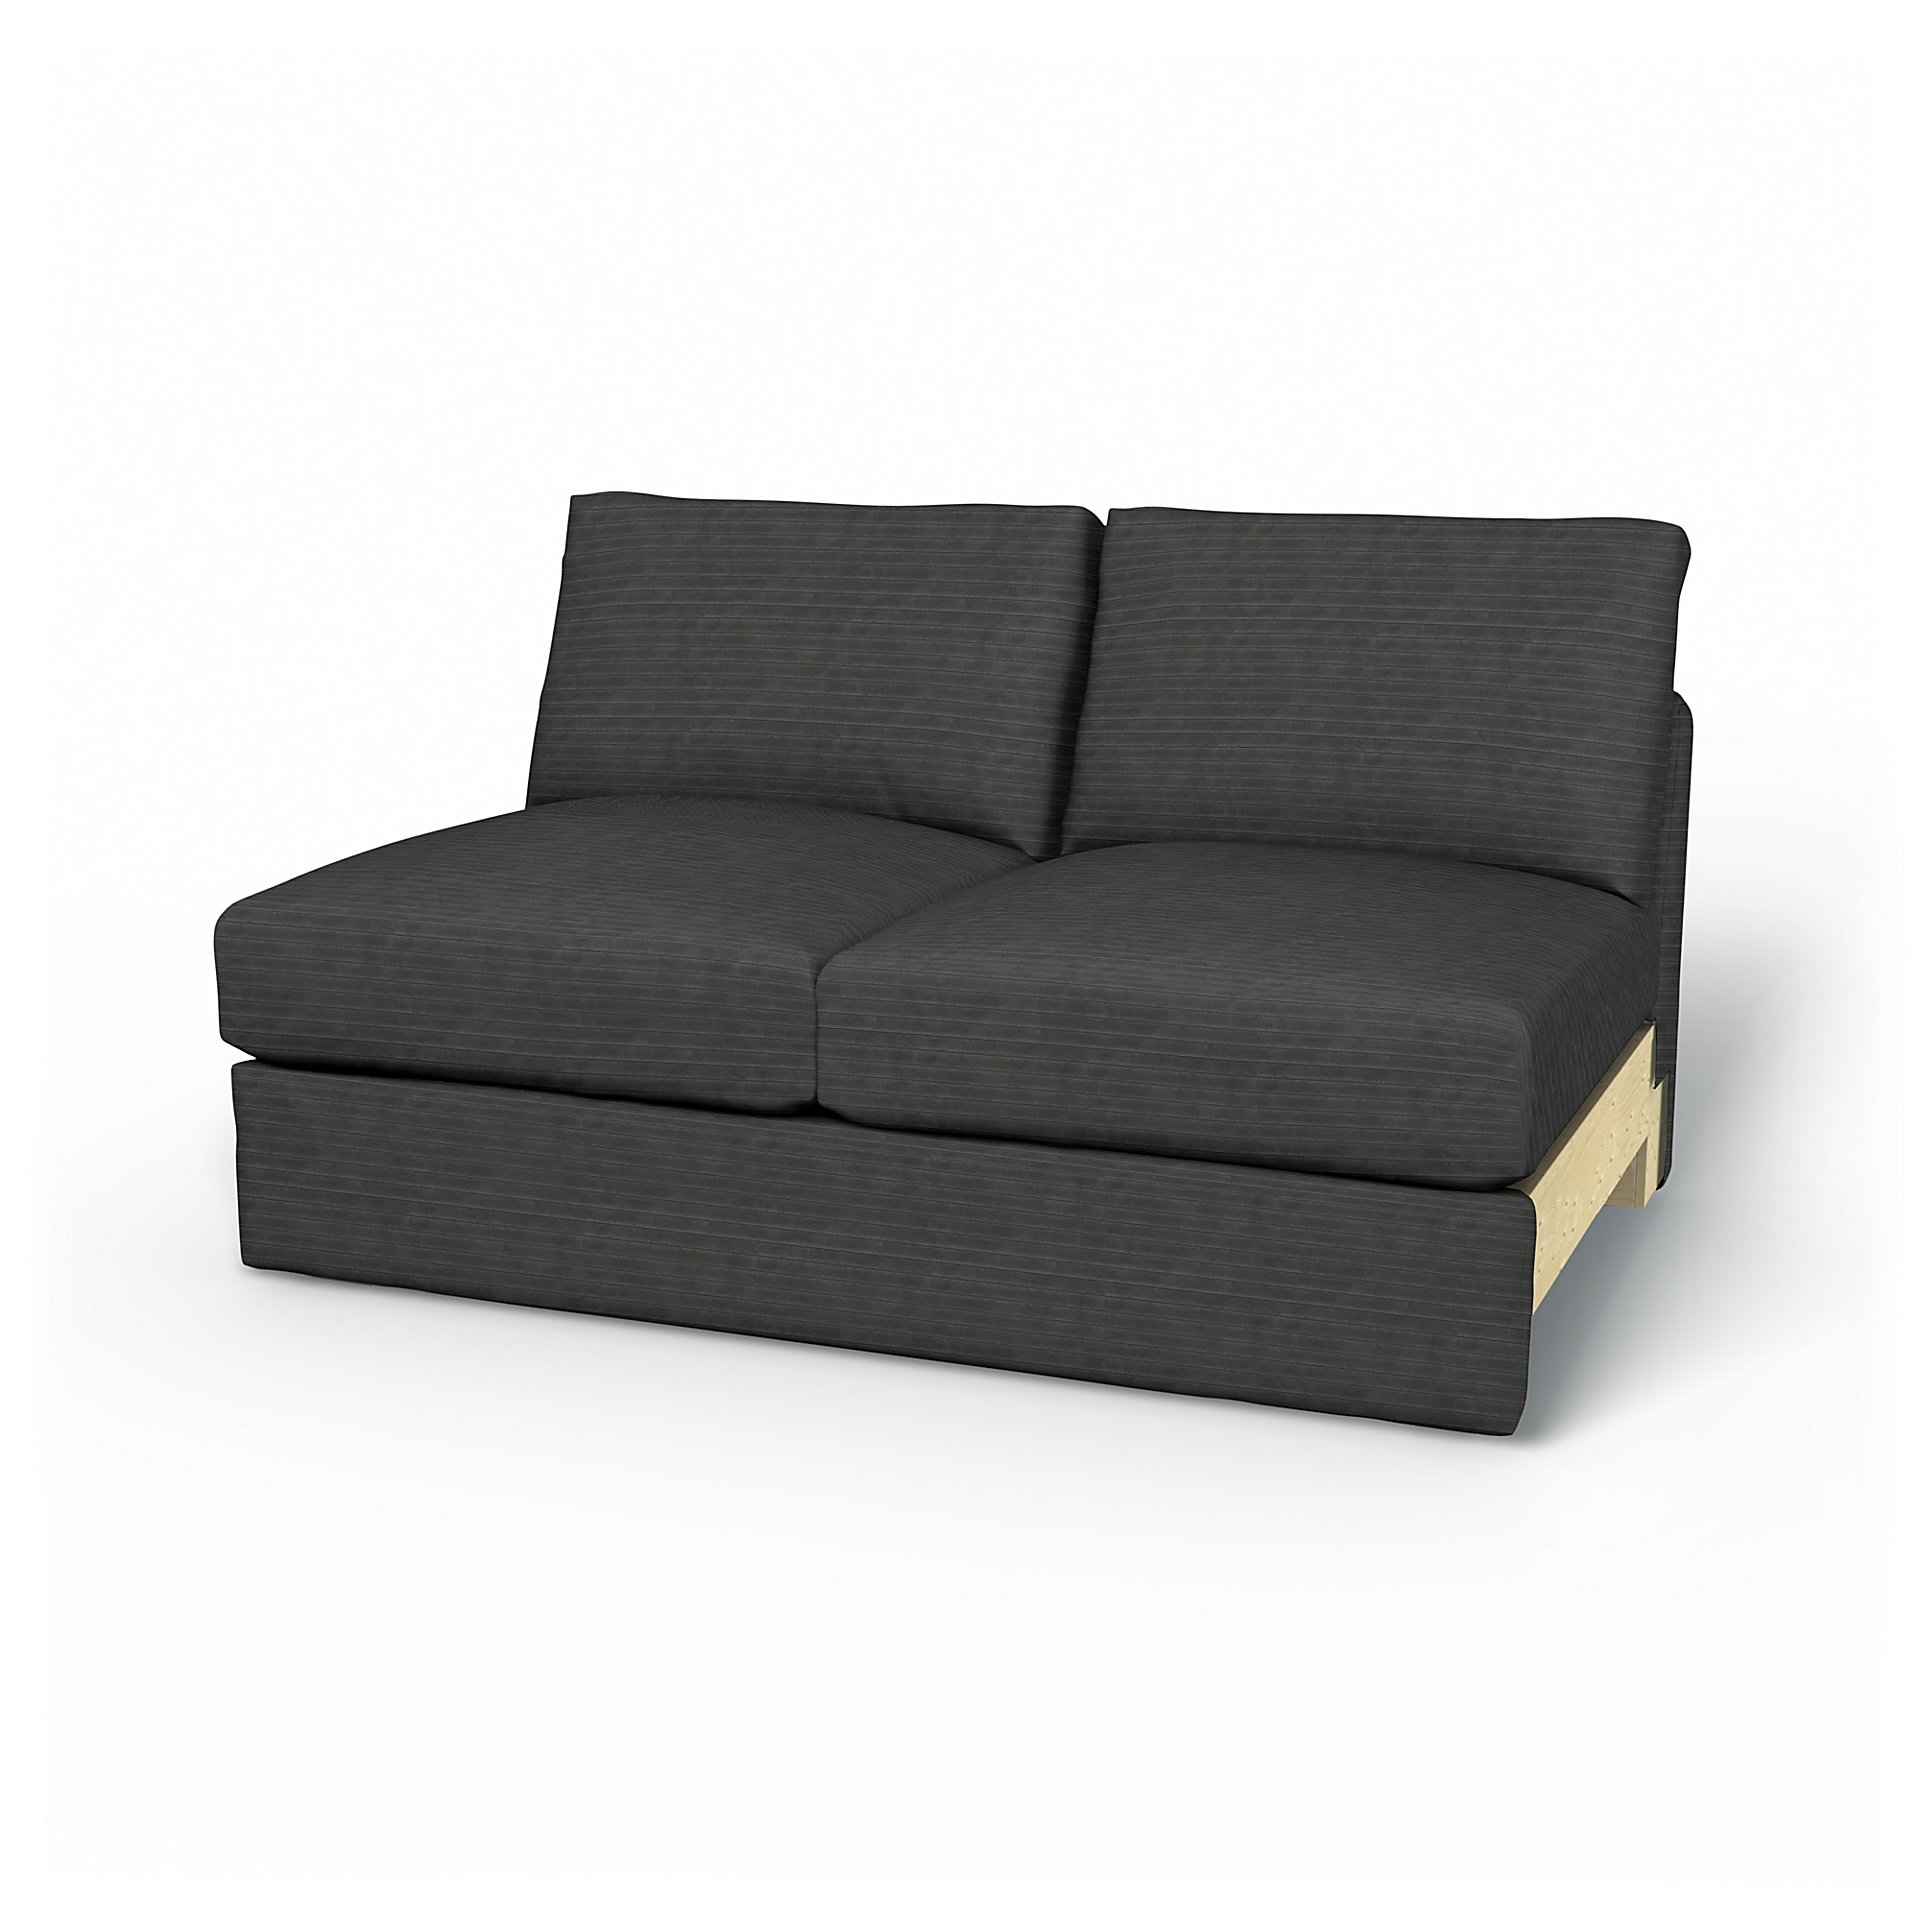 IKEA - Vimle 2 Seat Section Cover, Licorice, Corduroy - Bemz